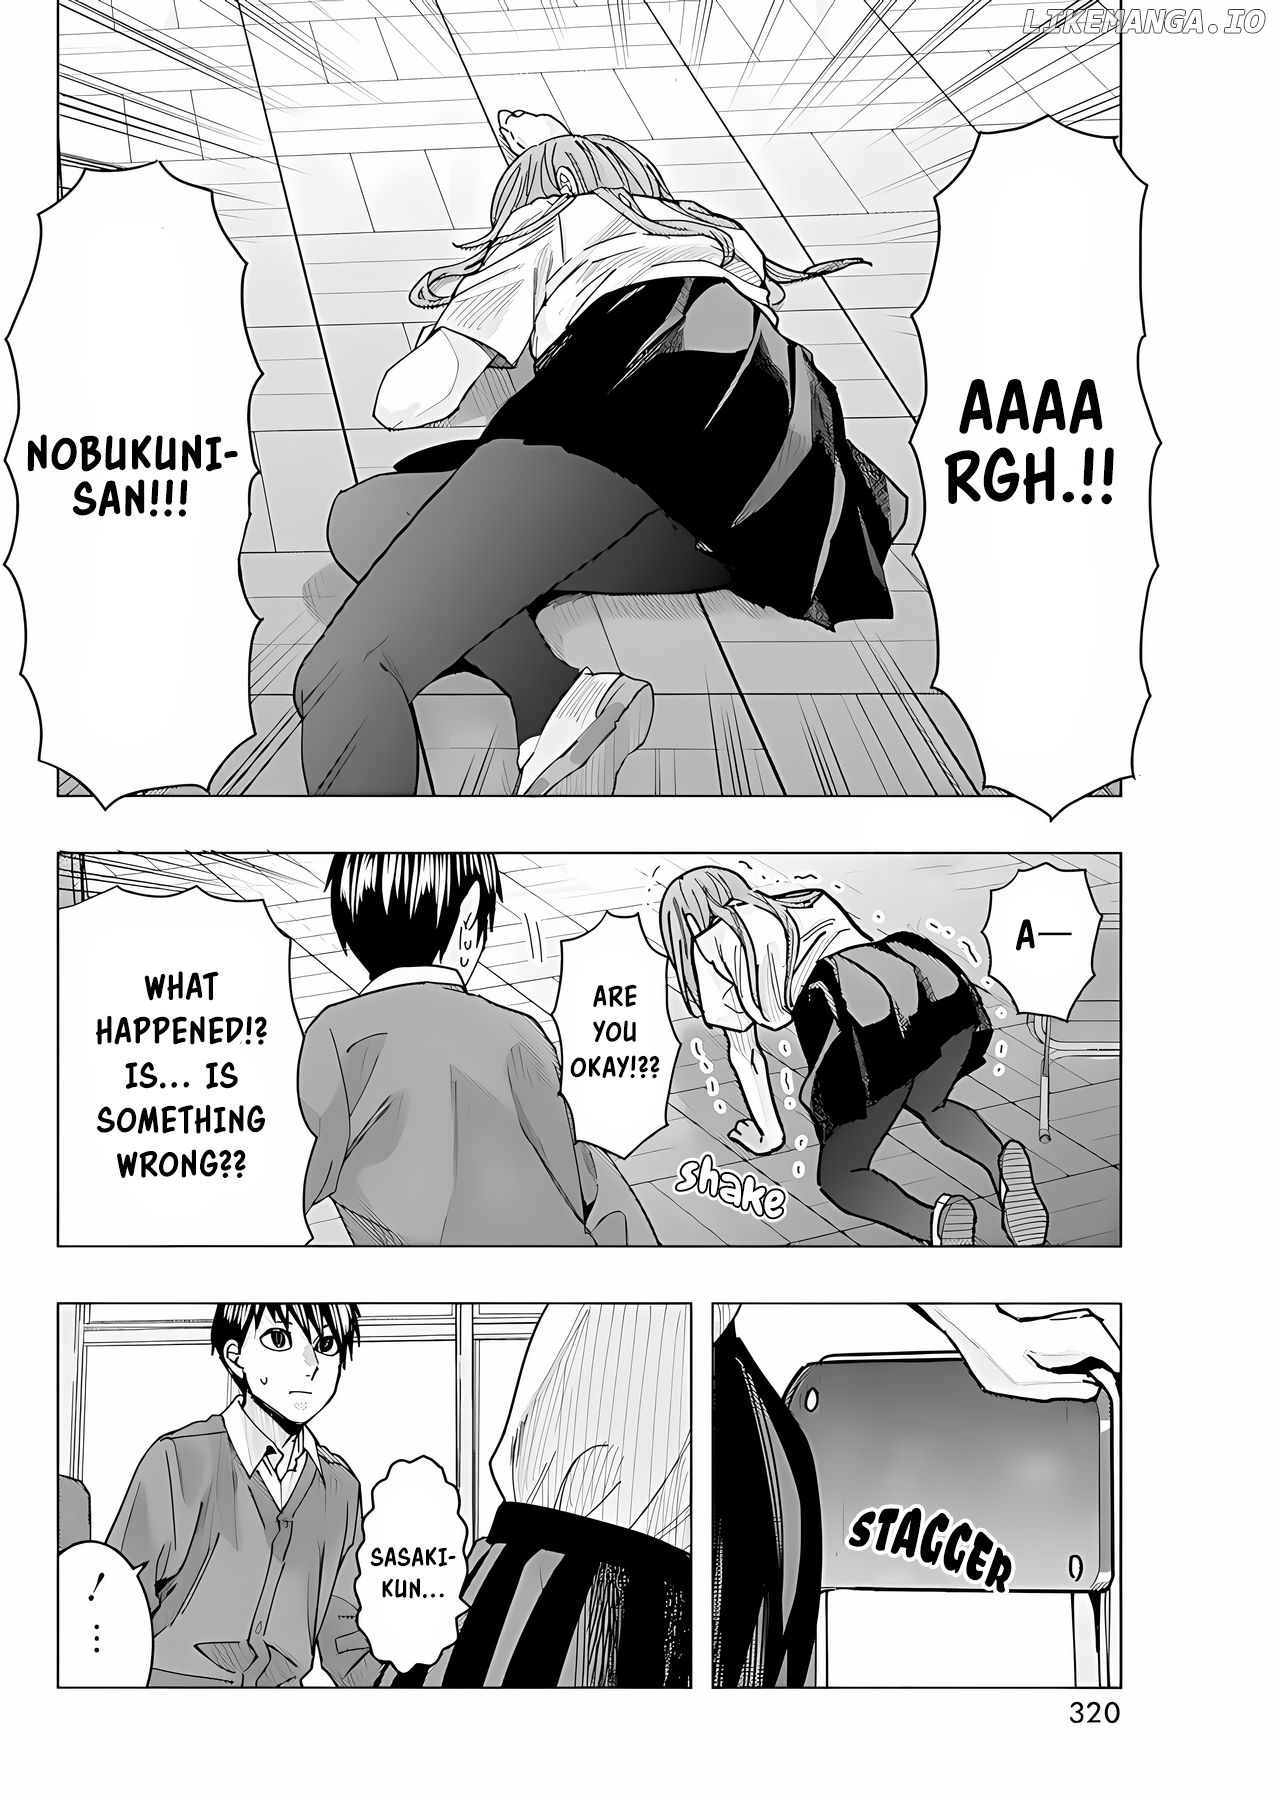 "nobukuni-San" Does She Like Me? chapter 21 - page 13